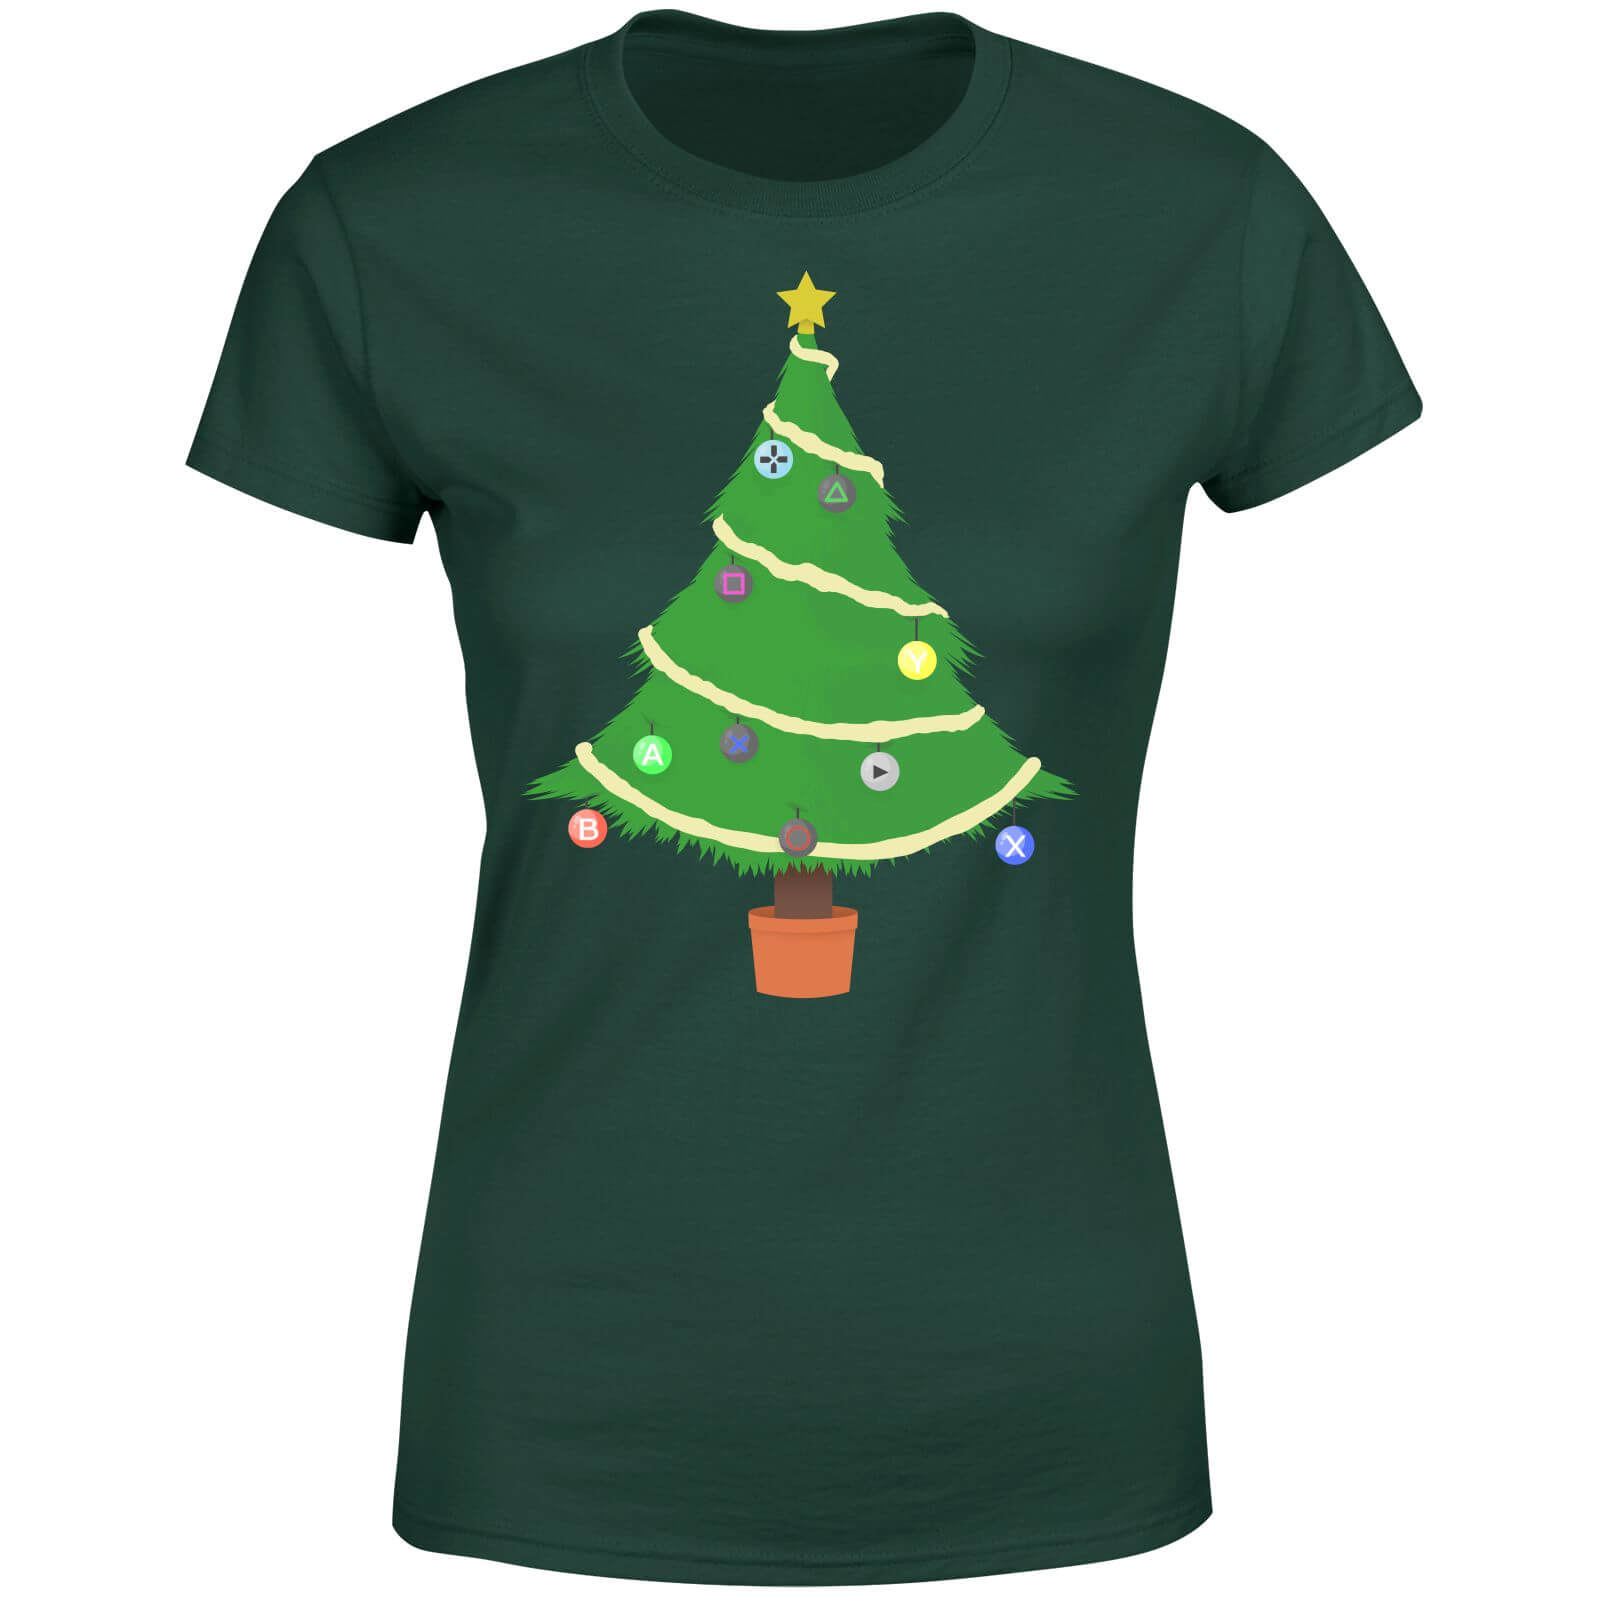 Buttons Tree Women's T-Shirt - Forest Green - S - Forest Green